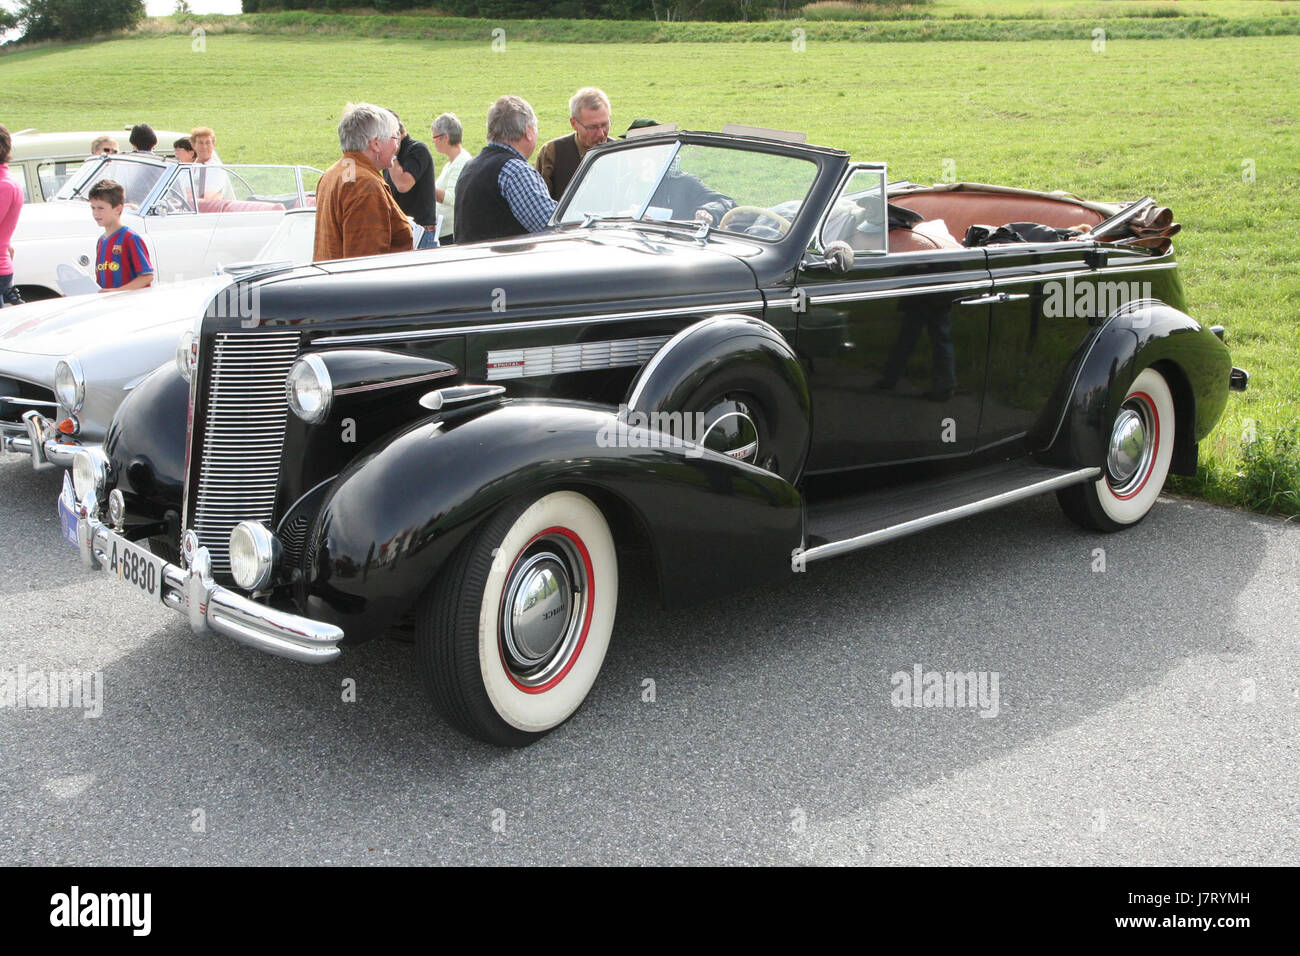 1937 Buick 4-türiges Cabriolet, Besitzer Richard Riim IMG 9234 Stockfoto